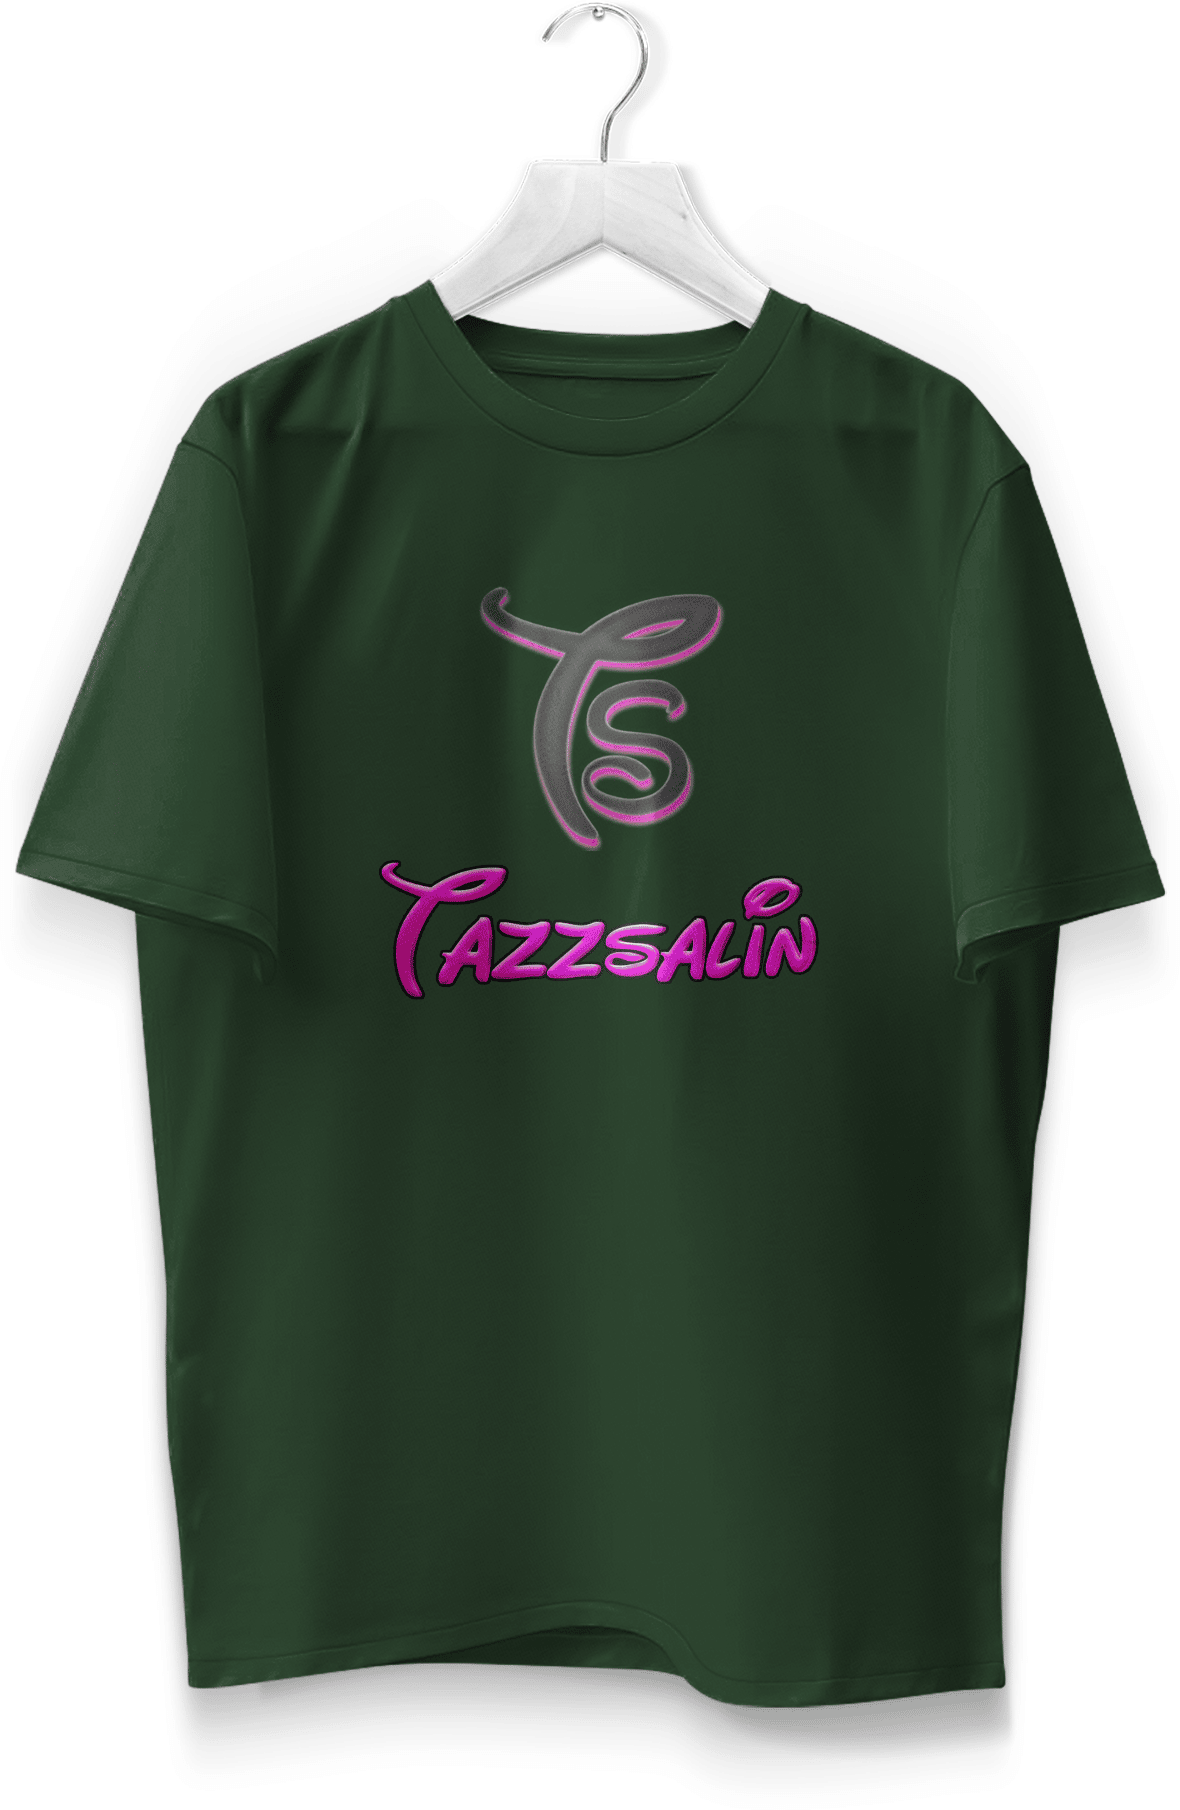 TazzSalin T-Shirt: Badge